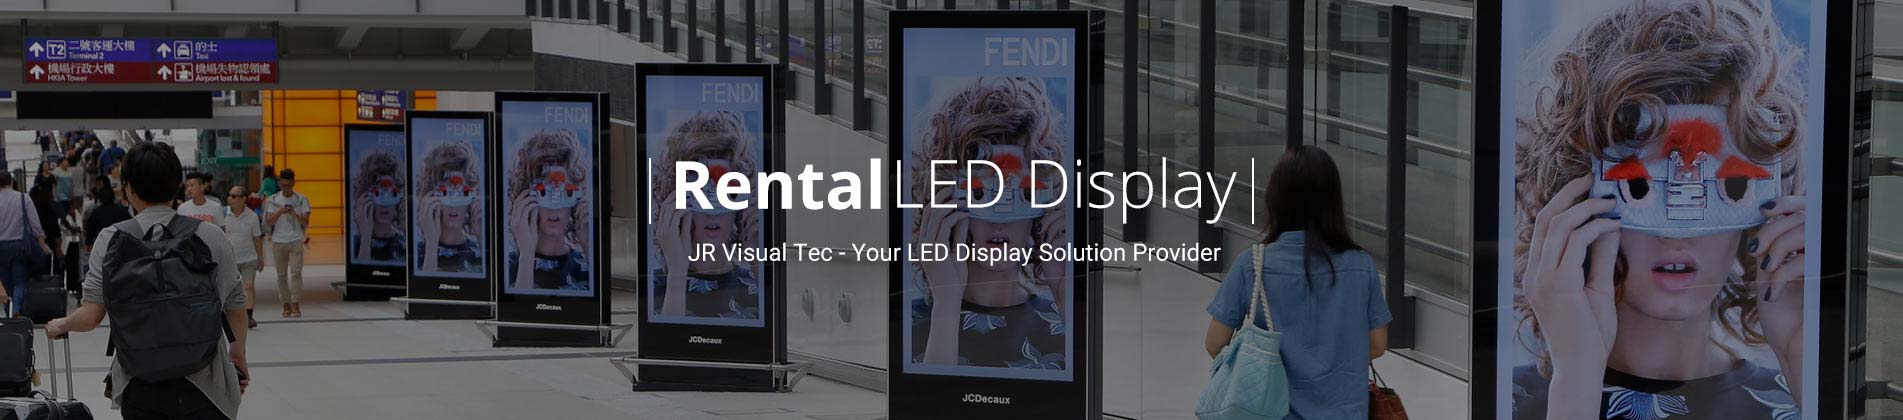 rental led display